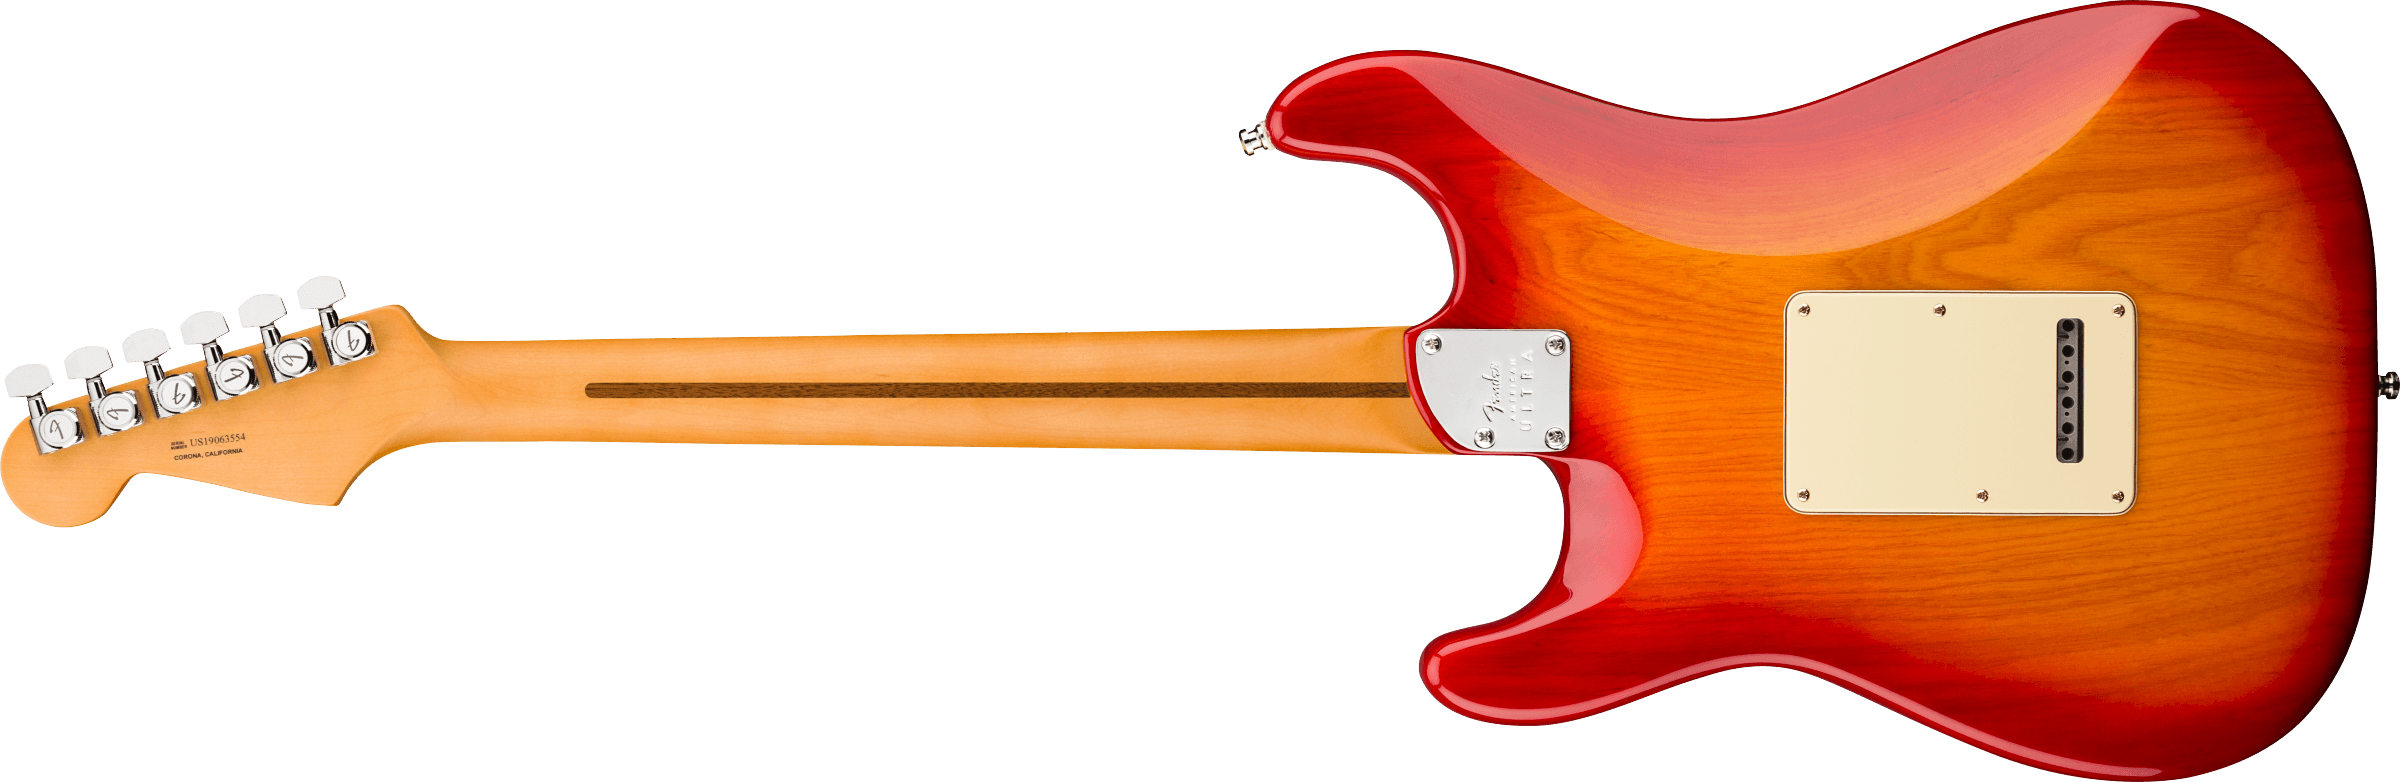 Fender Strat American Ultra Hss 2019 Usa Mn - Plasma Red Burst - Elektrische gitaar in Str-vorm - Variation 1